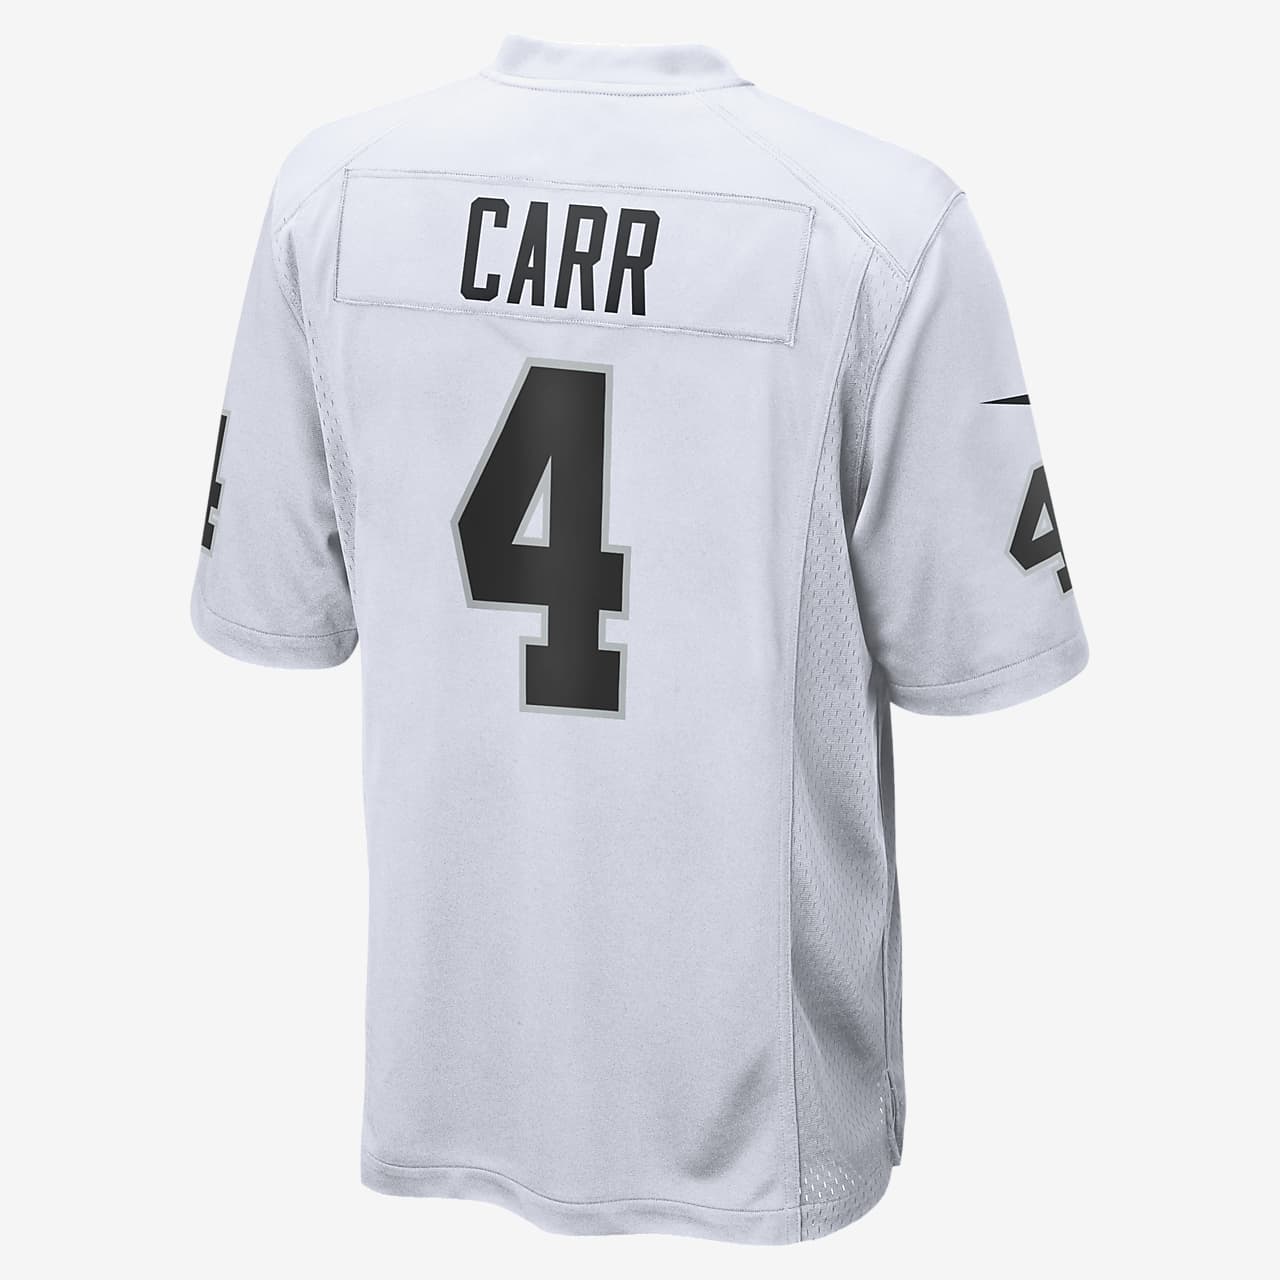 carr raiders shirt